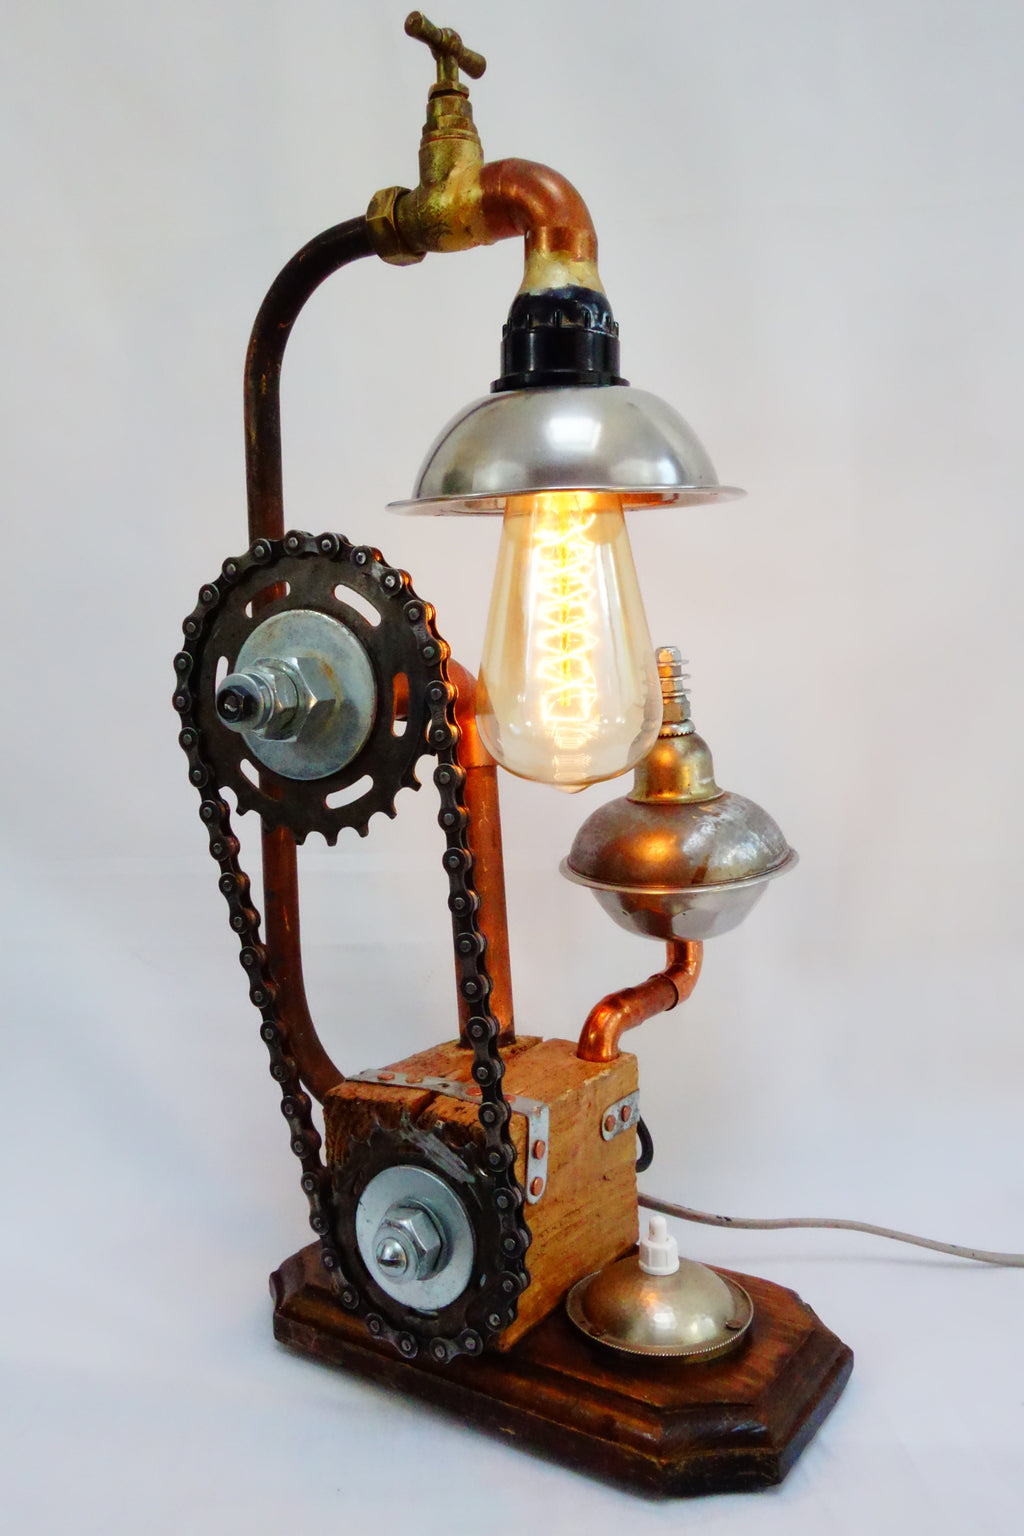 Lampe "Chaine"